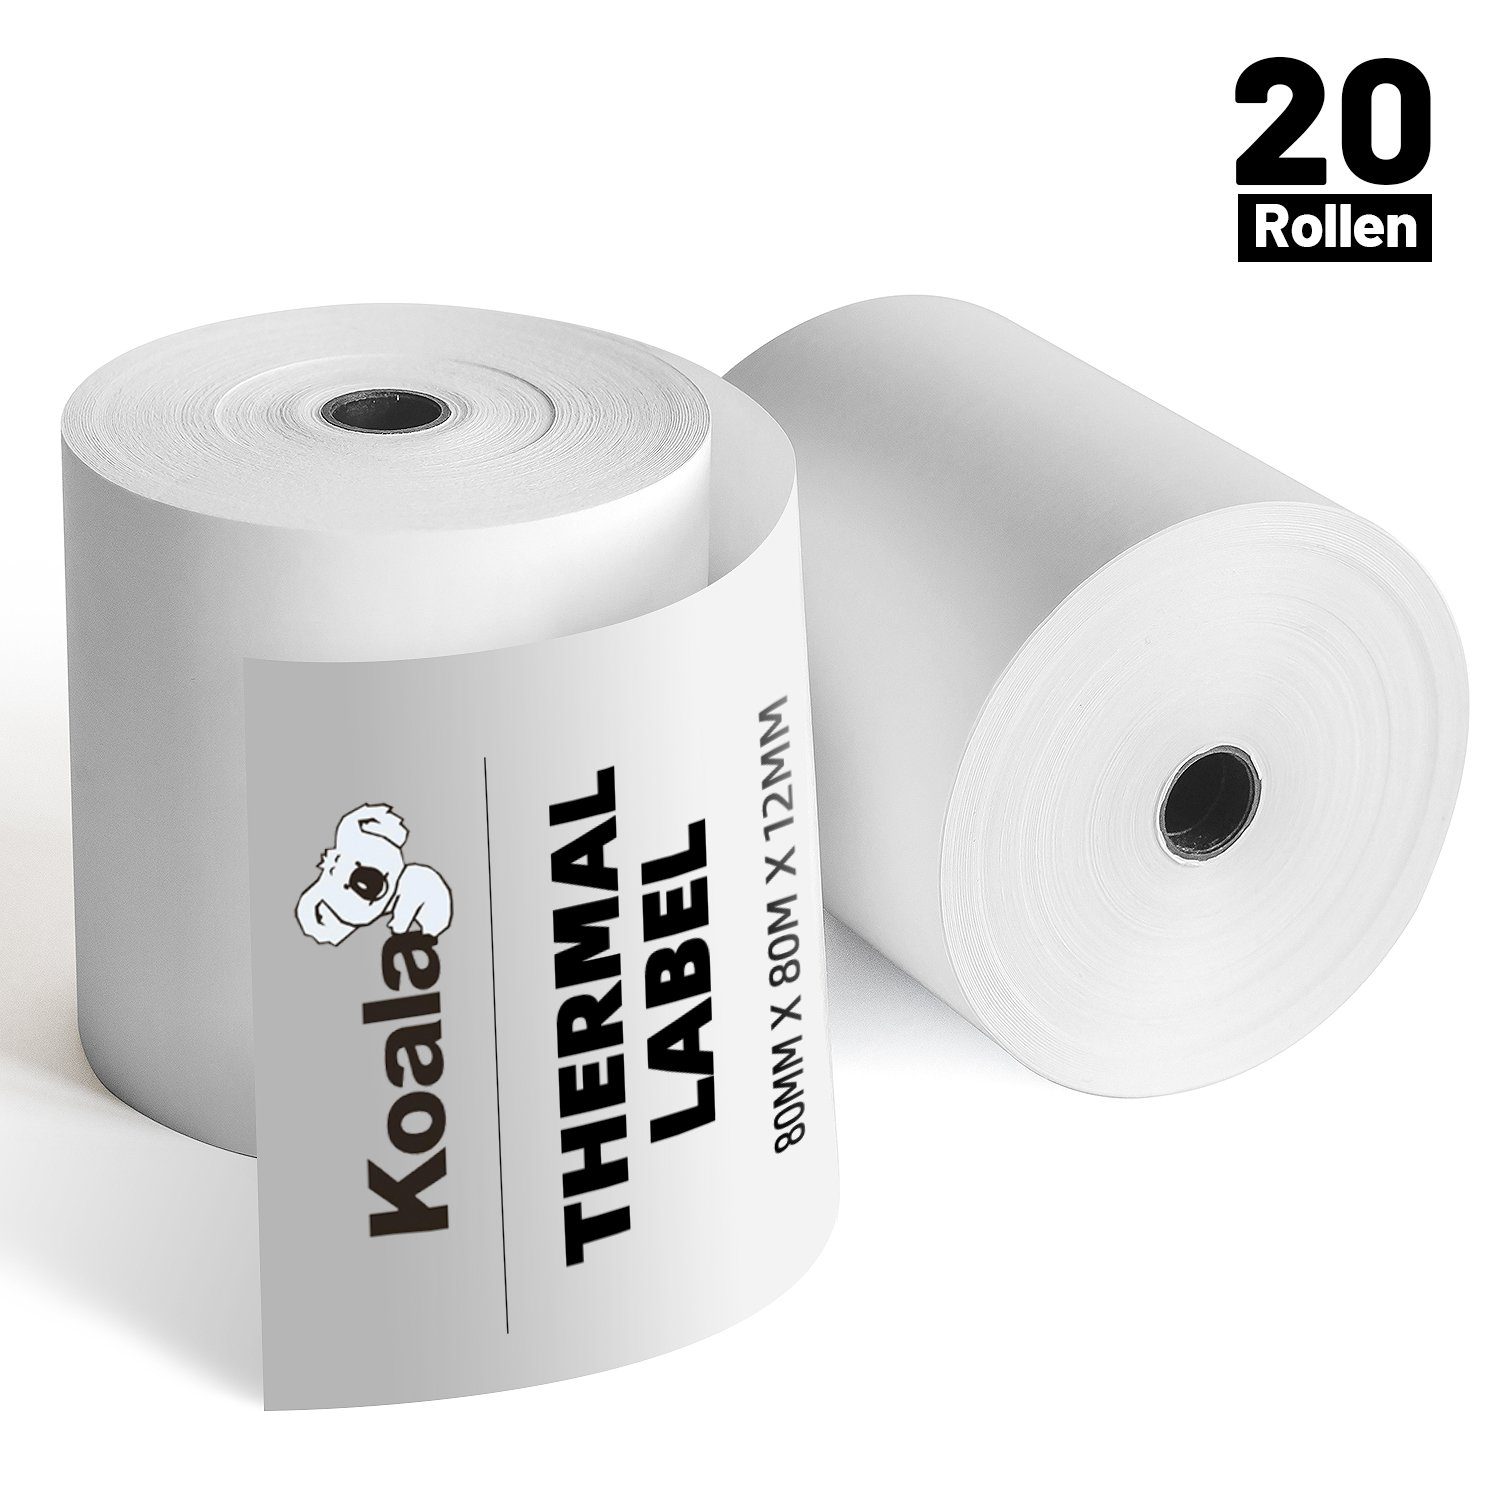 Koala Etikettenpapier 20 Rollen 80x 80mm Thermopapier Bonrolle für Kassen, Drucker | Papier